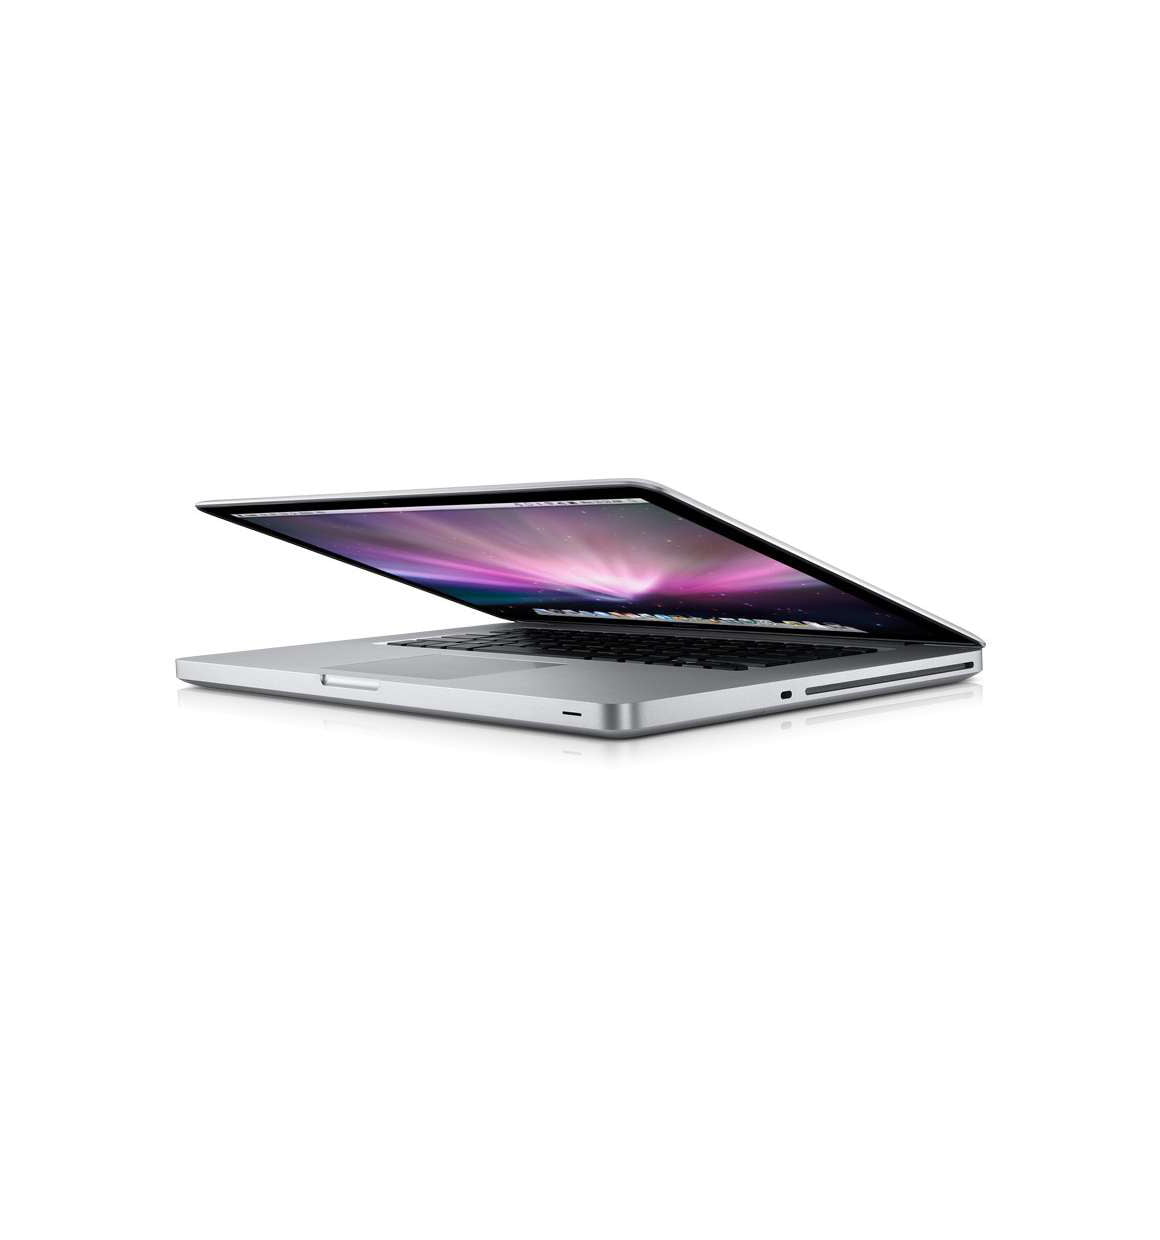 15 inch Macbook Pro Hire Melbourne Sydney 02